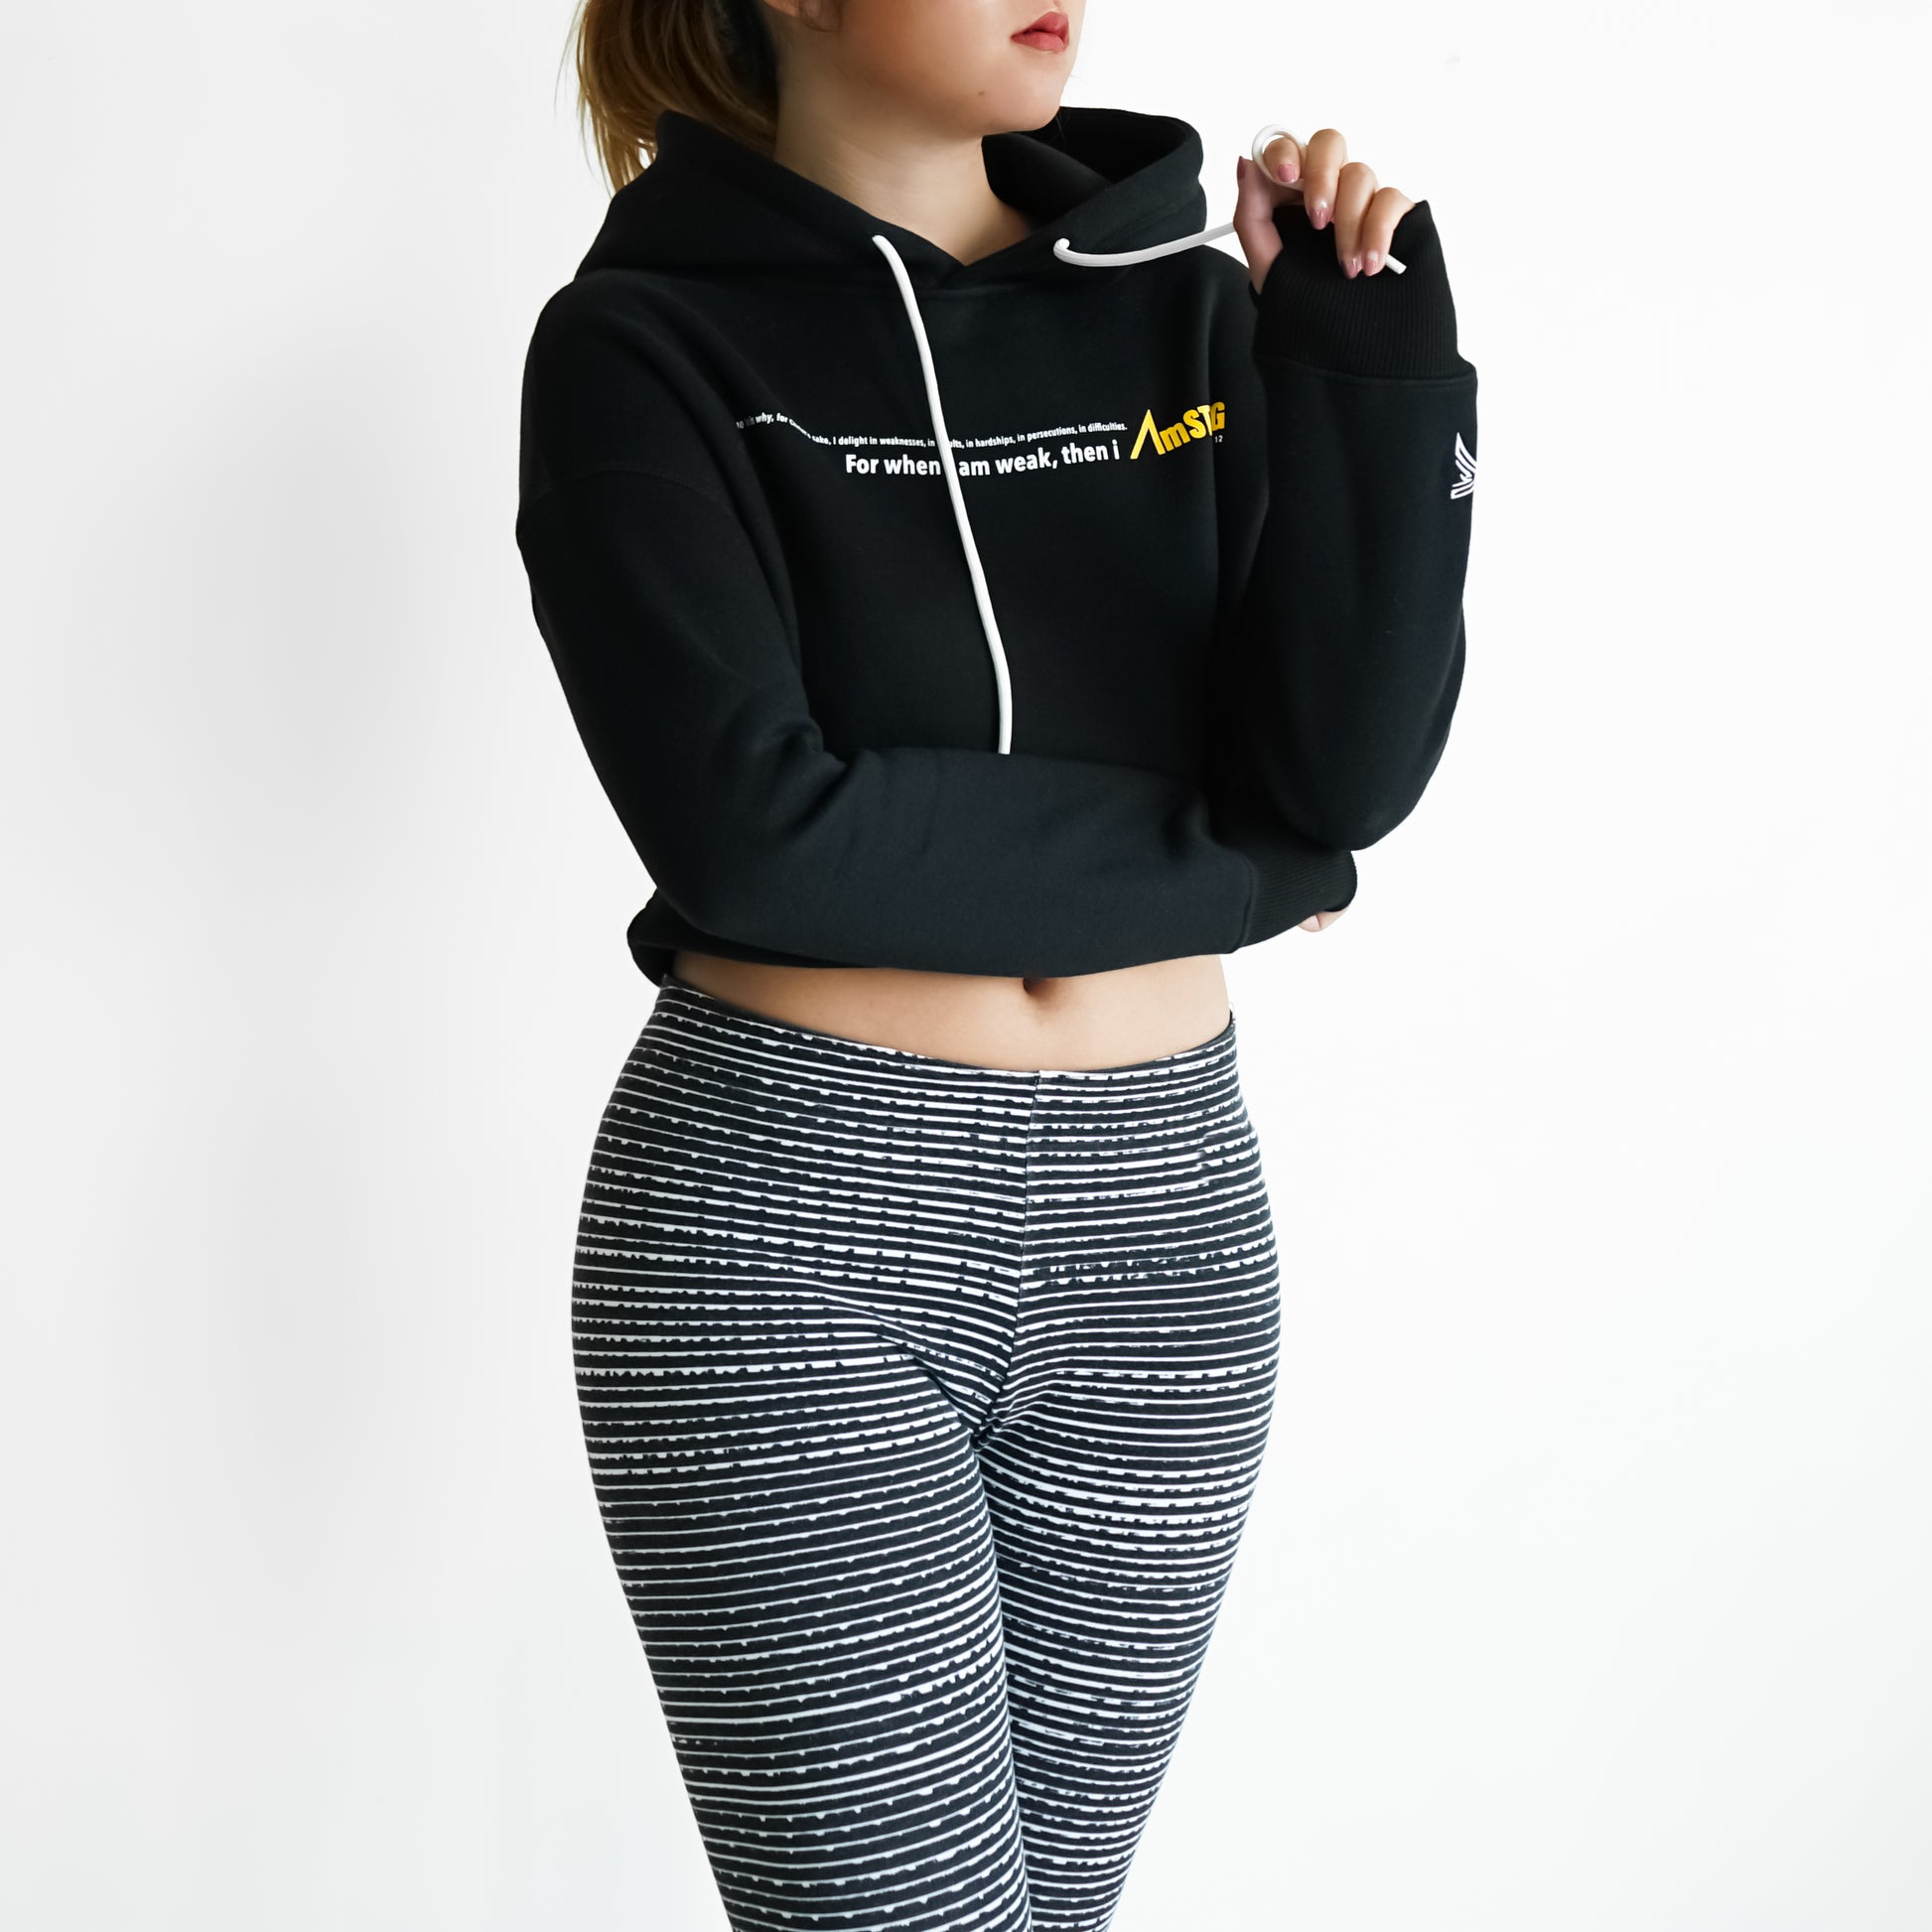 woman in a black cropped hoodie and leggings